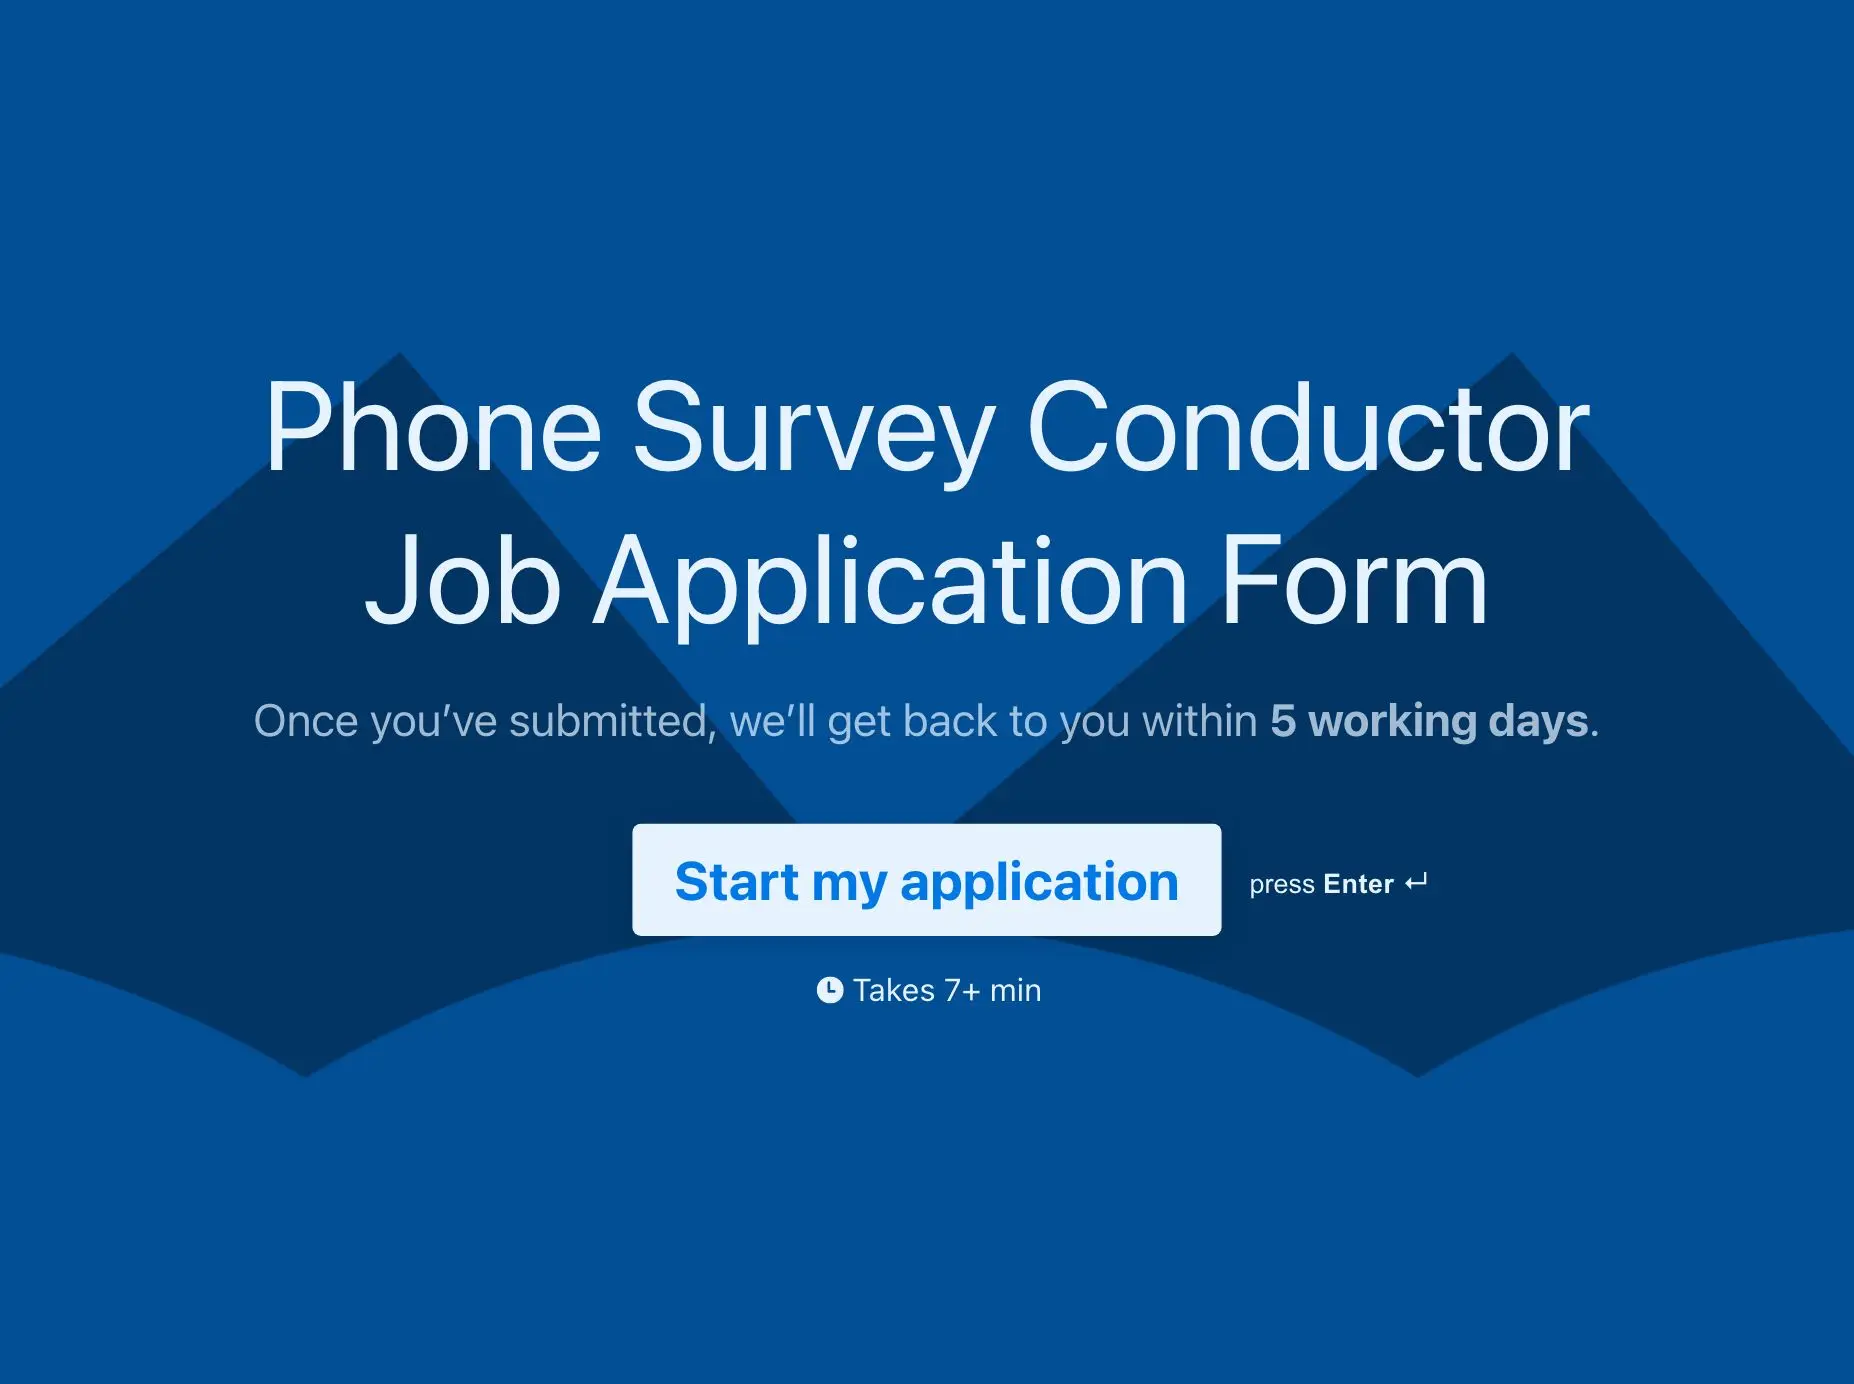 Phone Survey Conductor Job Application Form Template Hero